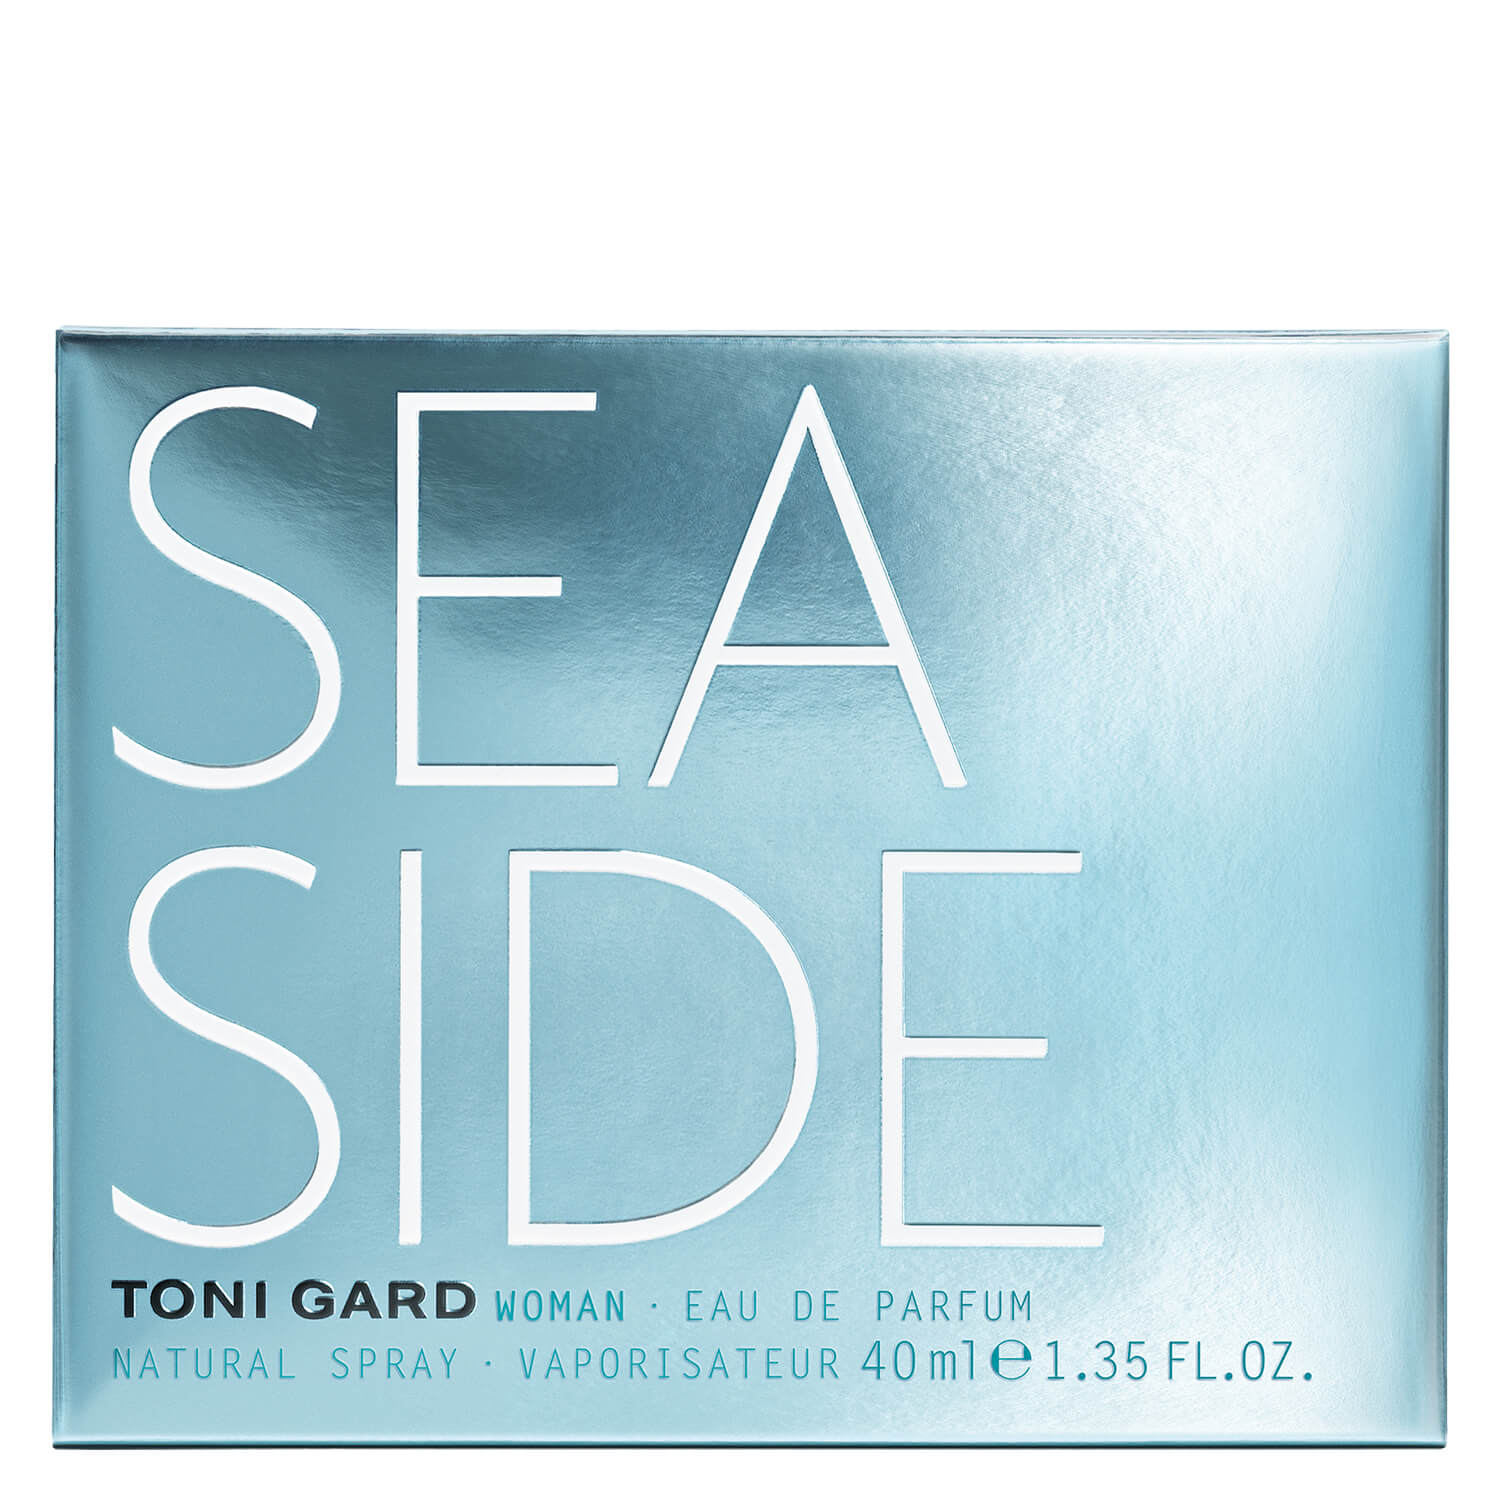 TONI GARD - Woman Side Eau Parfum de Sea